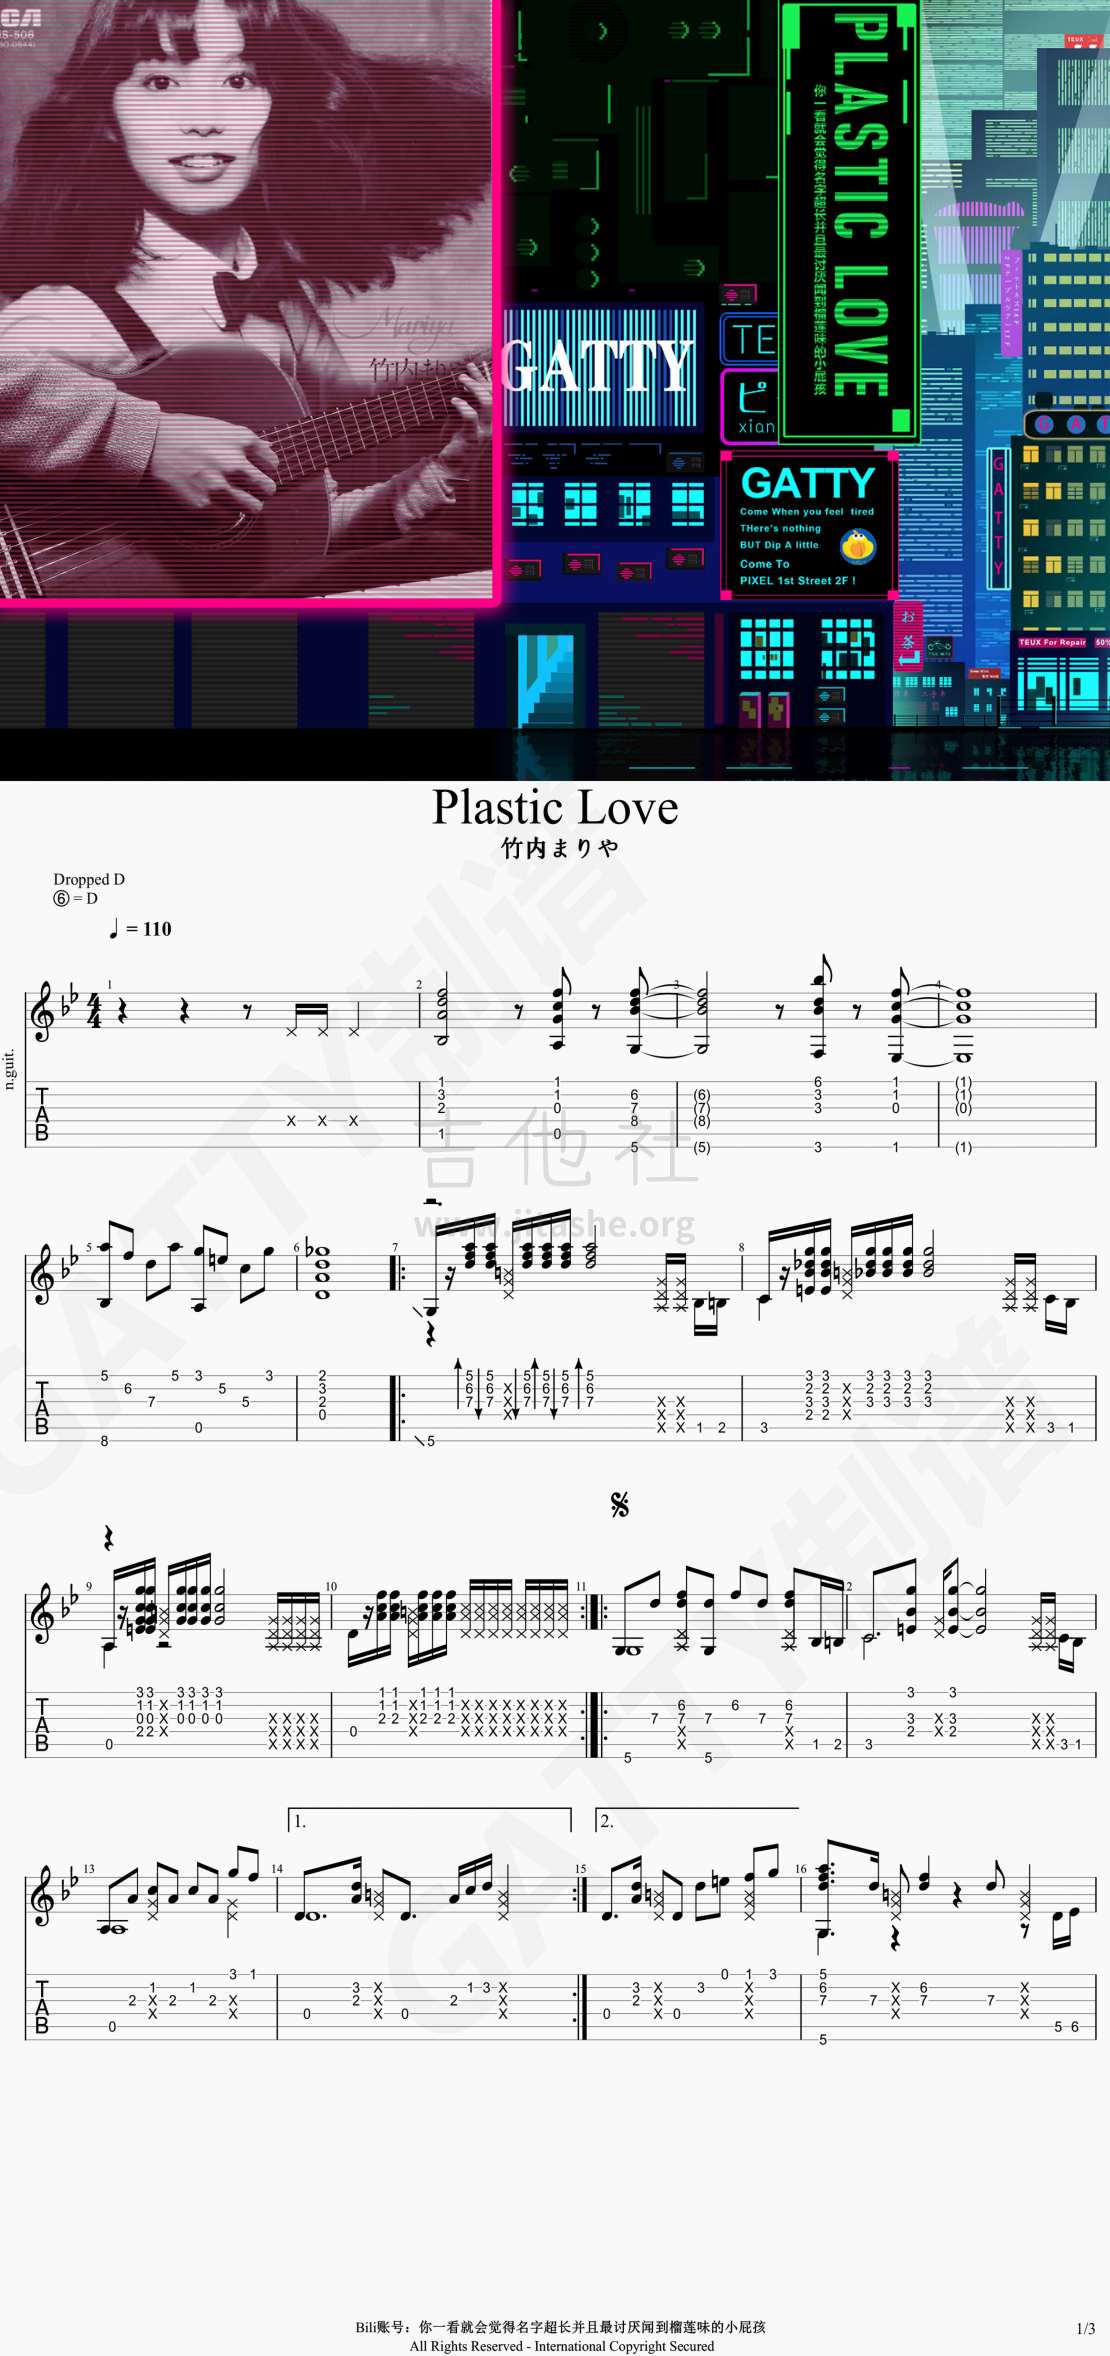 Plastic love吉他谱(图片谱,指弹,改编版,独奏)_竹内まりや(たけうち まりや;竹内玛利亚;Mariya Takeuchi)_1.png